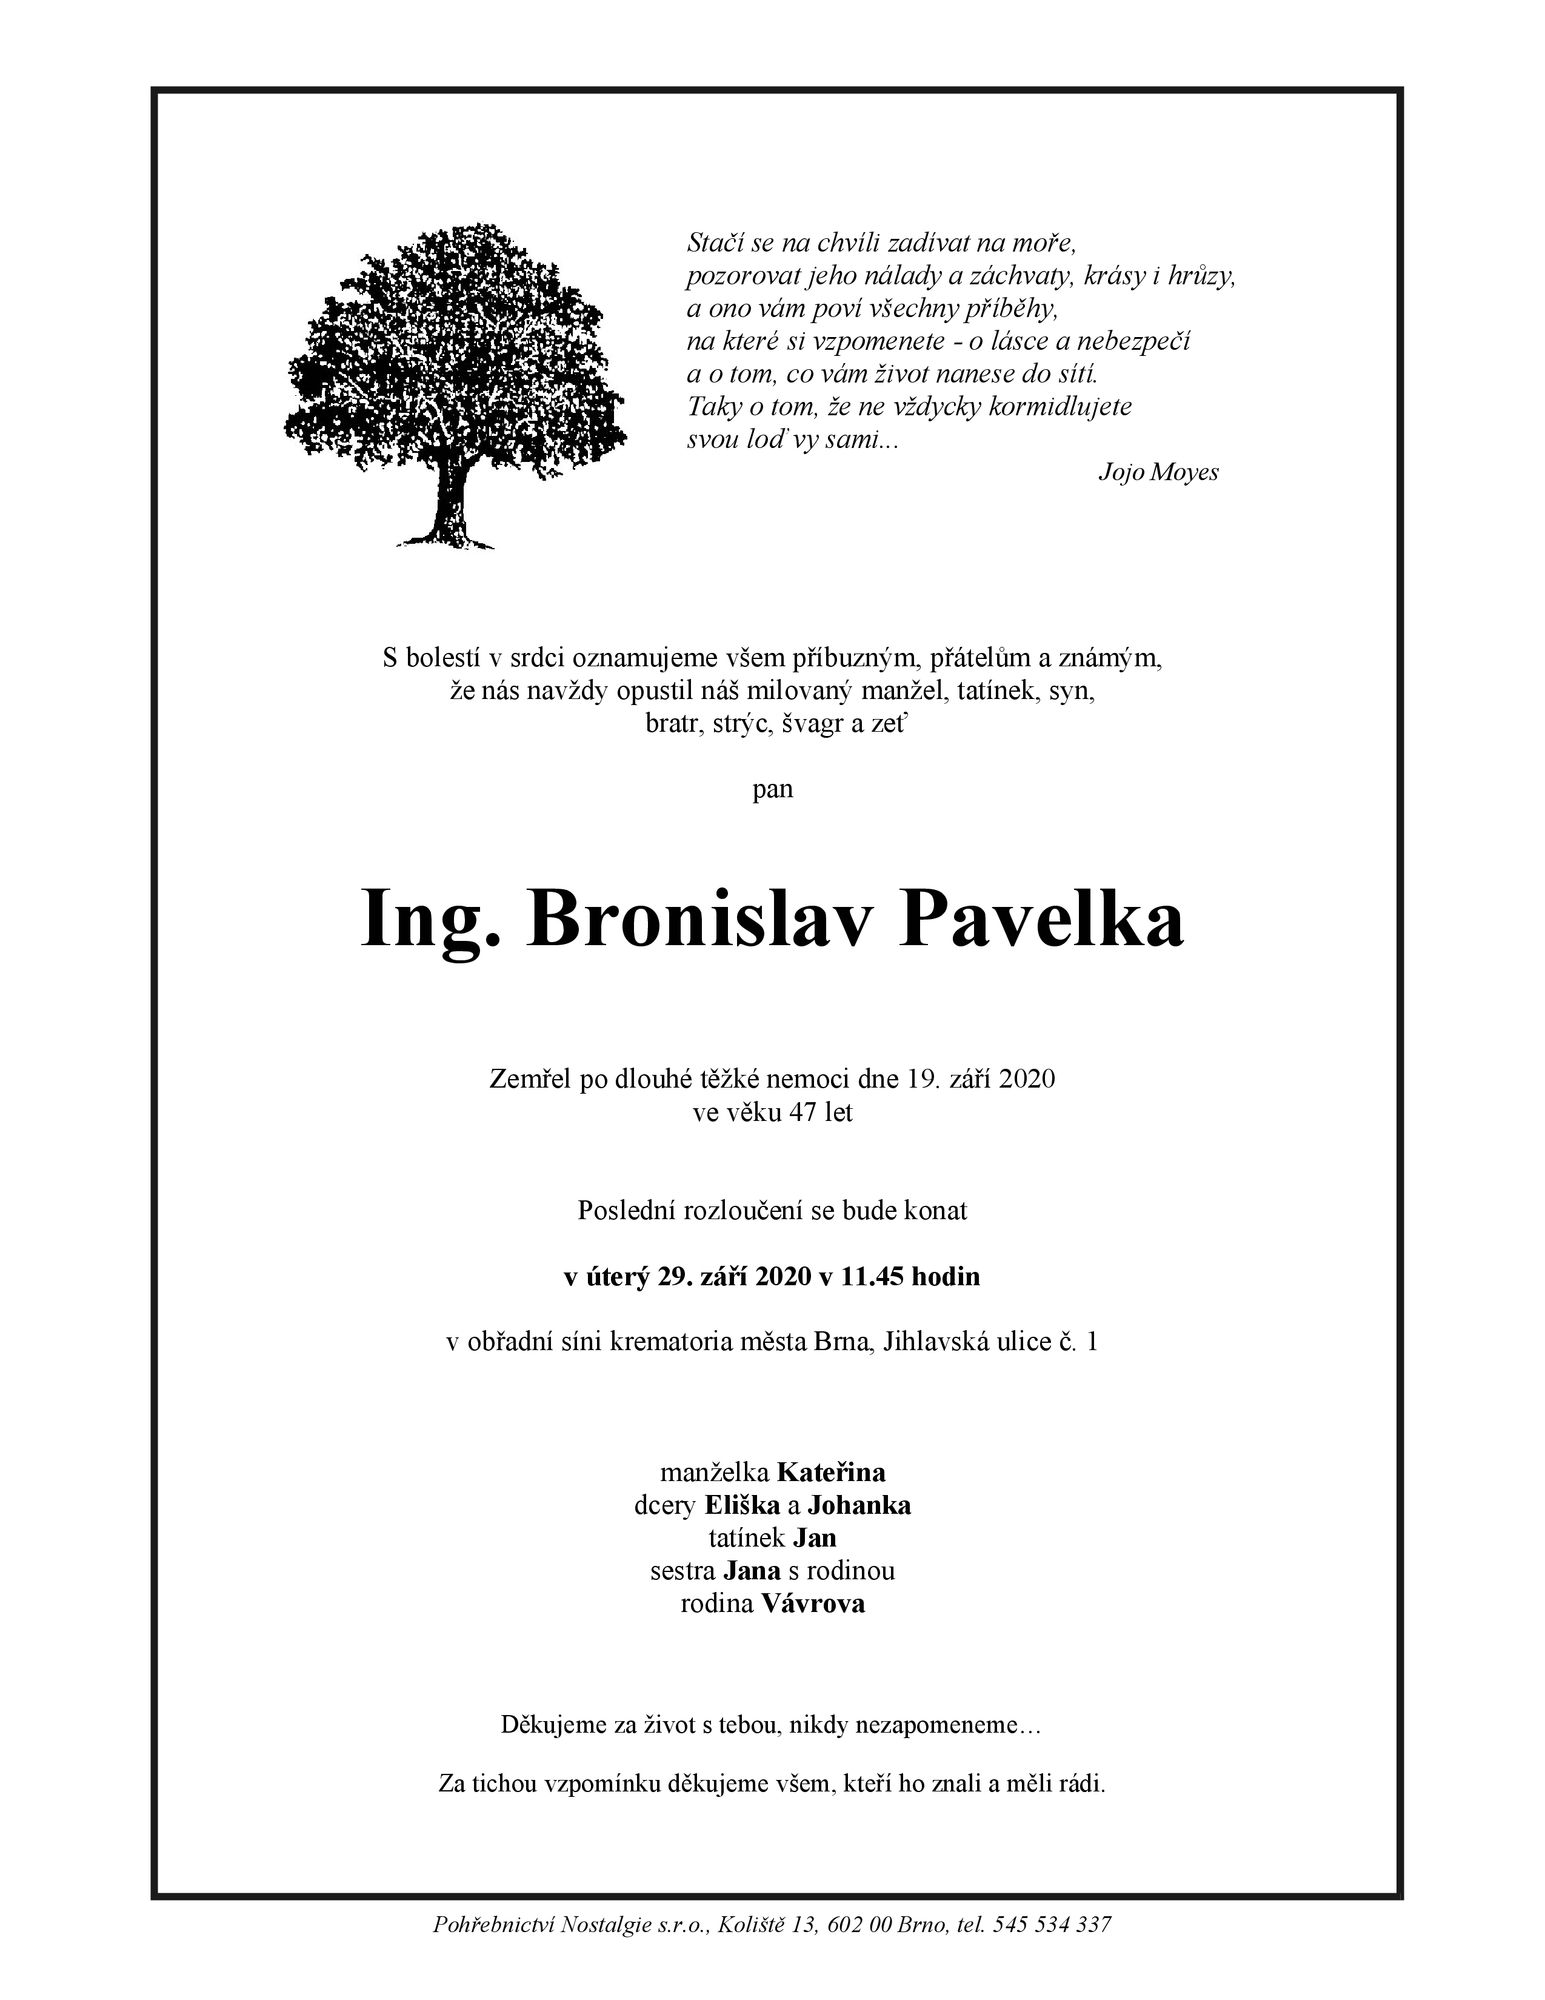 Ing. Bronislav Pavelka